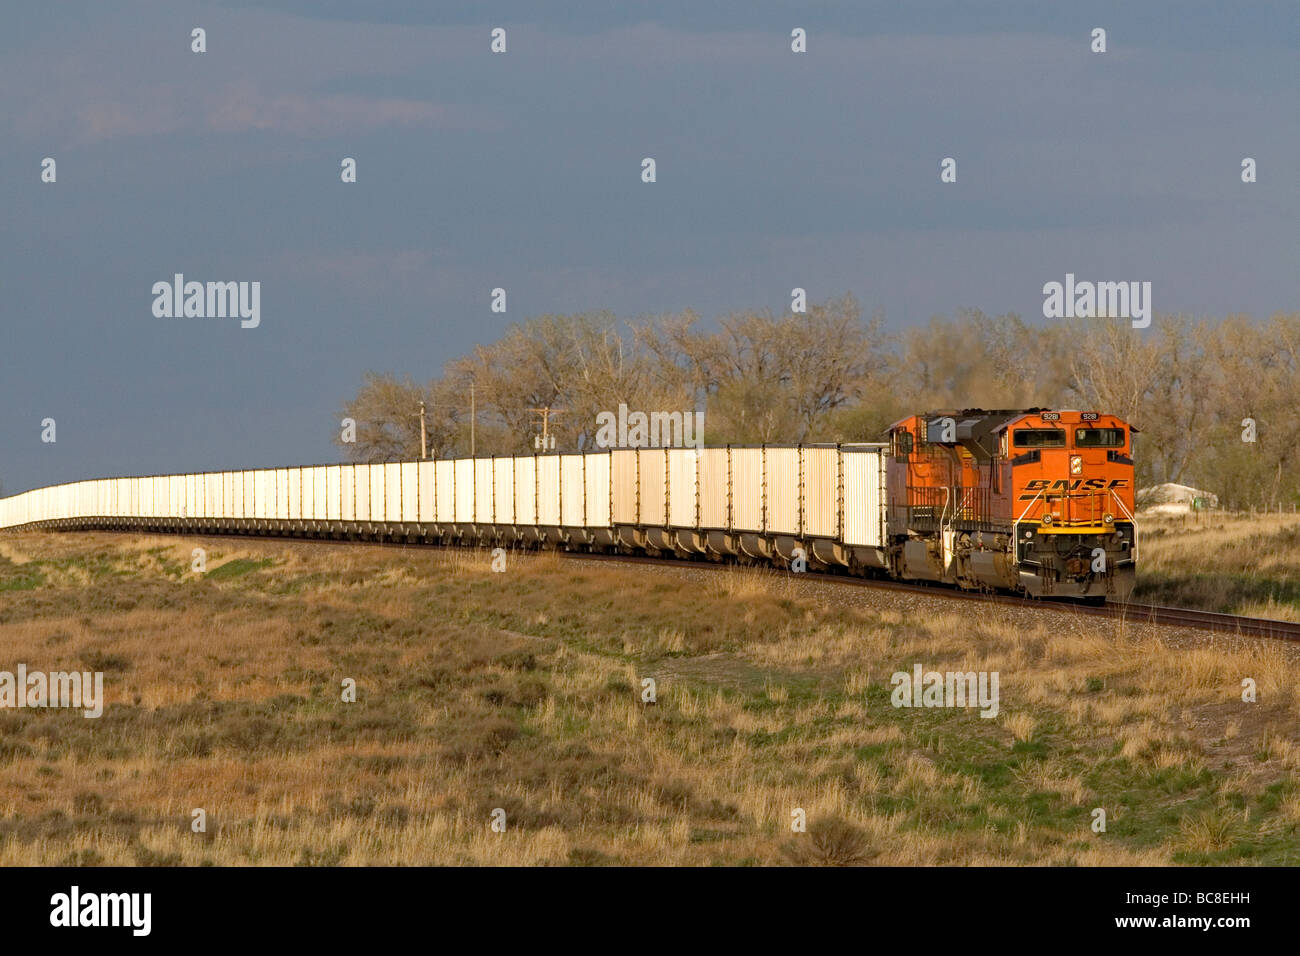 La BNSF Railway train de fret le transport de wagons de charbon près de Ft Morgan Colorado USA Banque D'Images